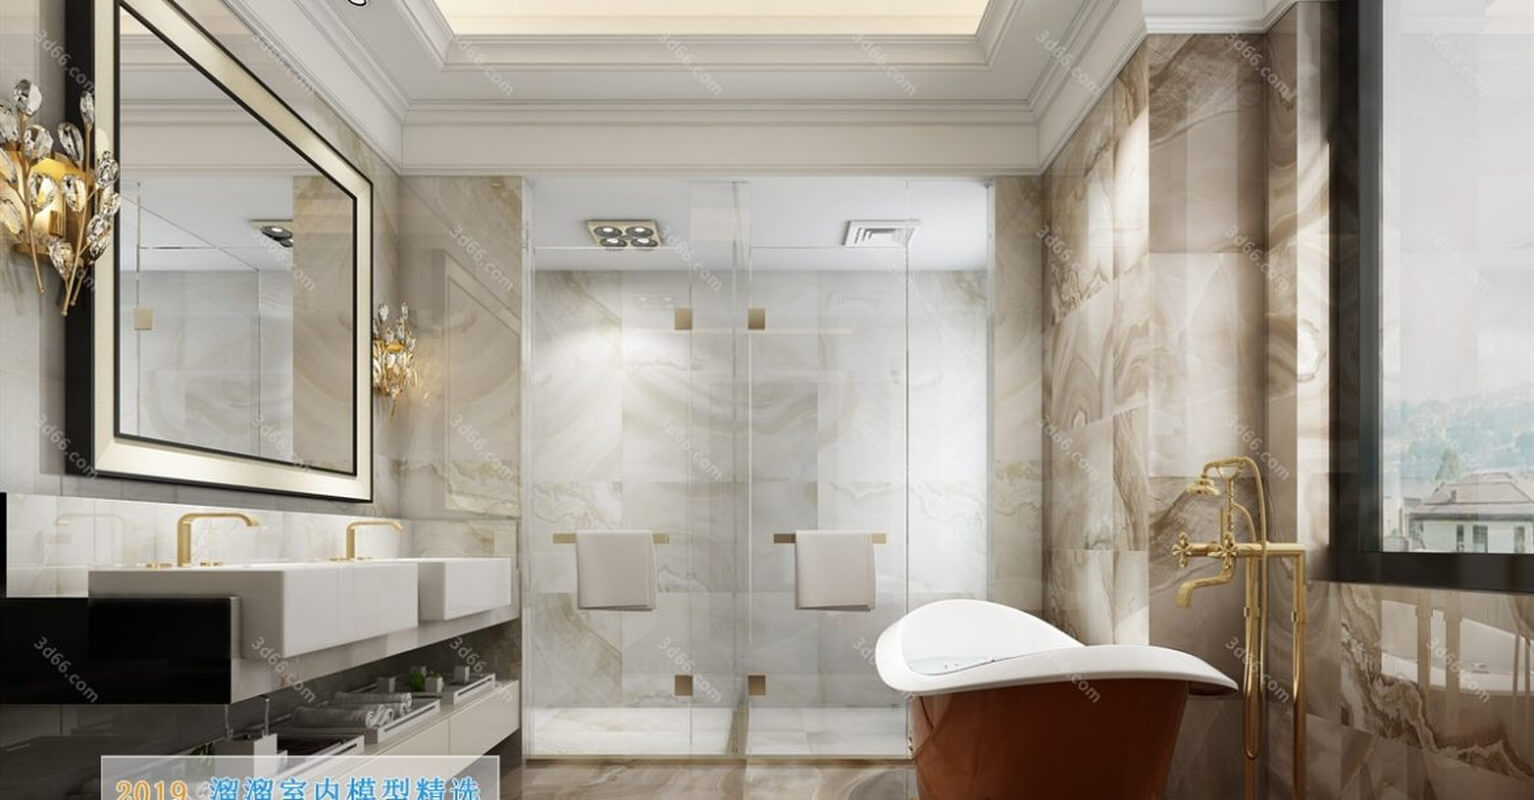 3D66 Toilet & Bathroom Interior 2019 Style (04)